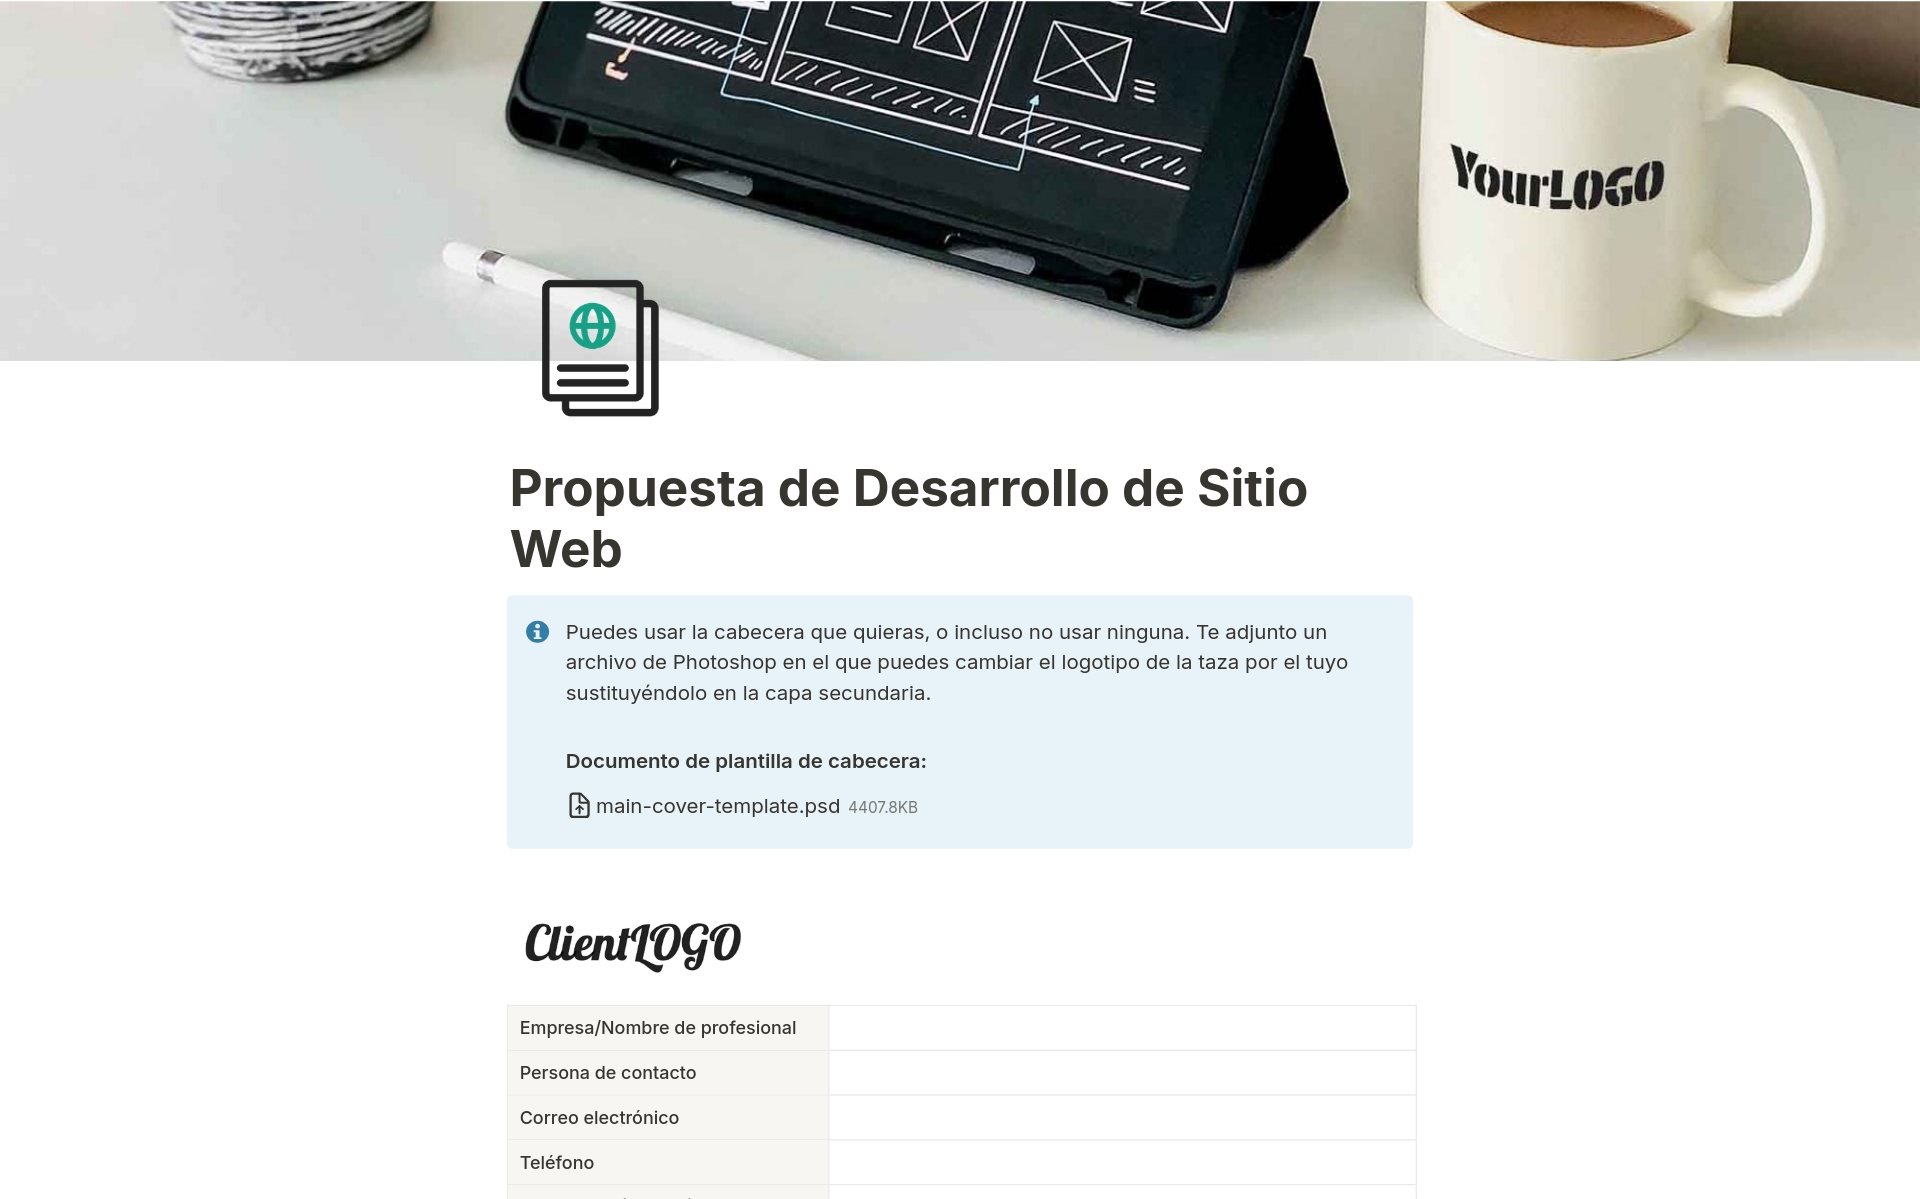 Eine Vorlagenvorschau für Propuesta de Desarrollo de Sitio Web